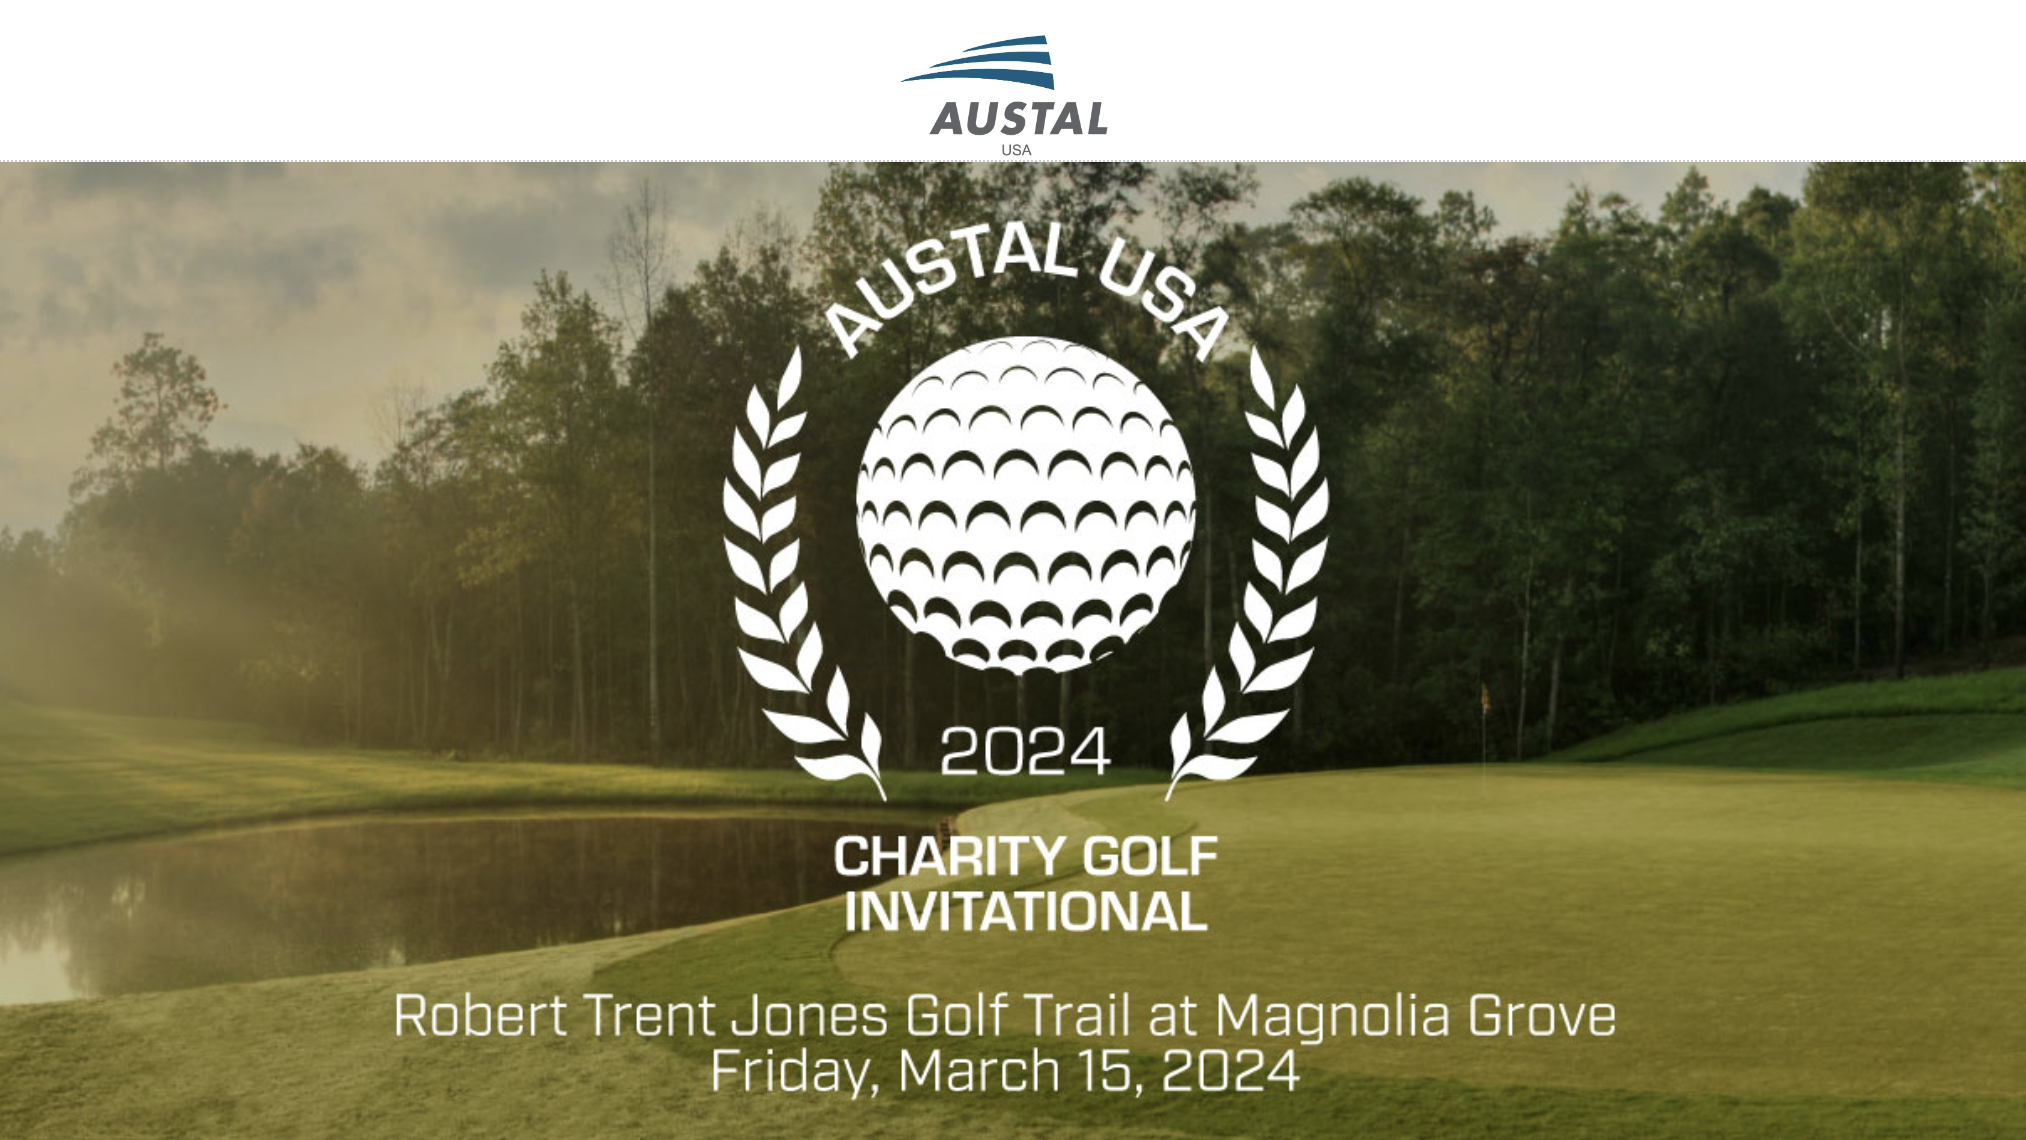 Austals Charity Golf Invitational Announced